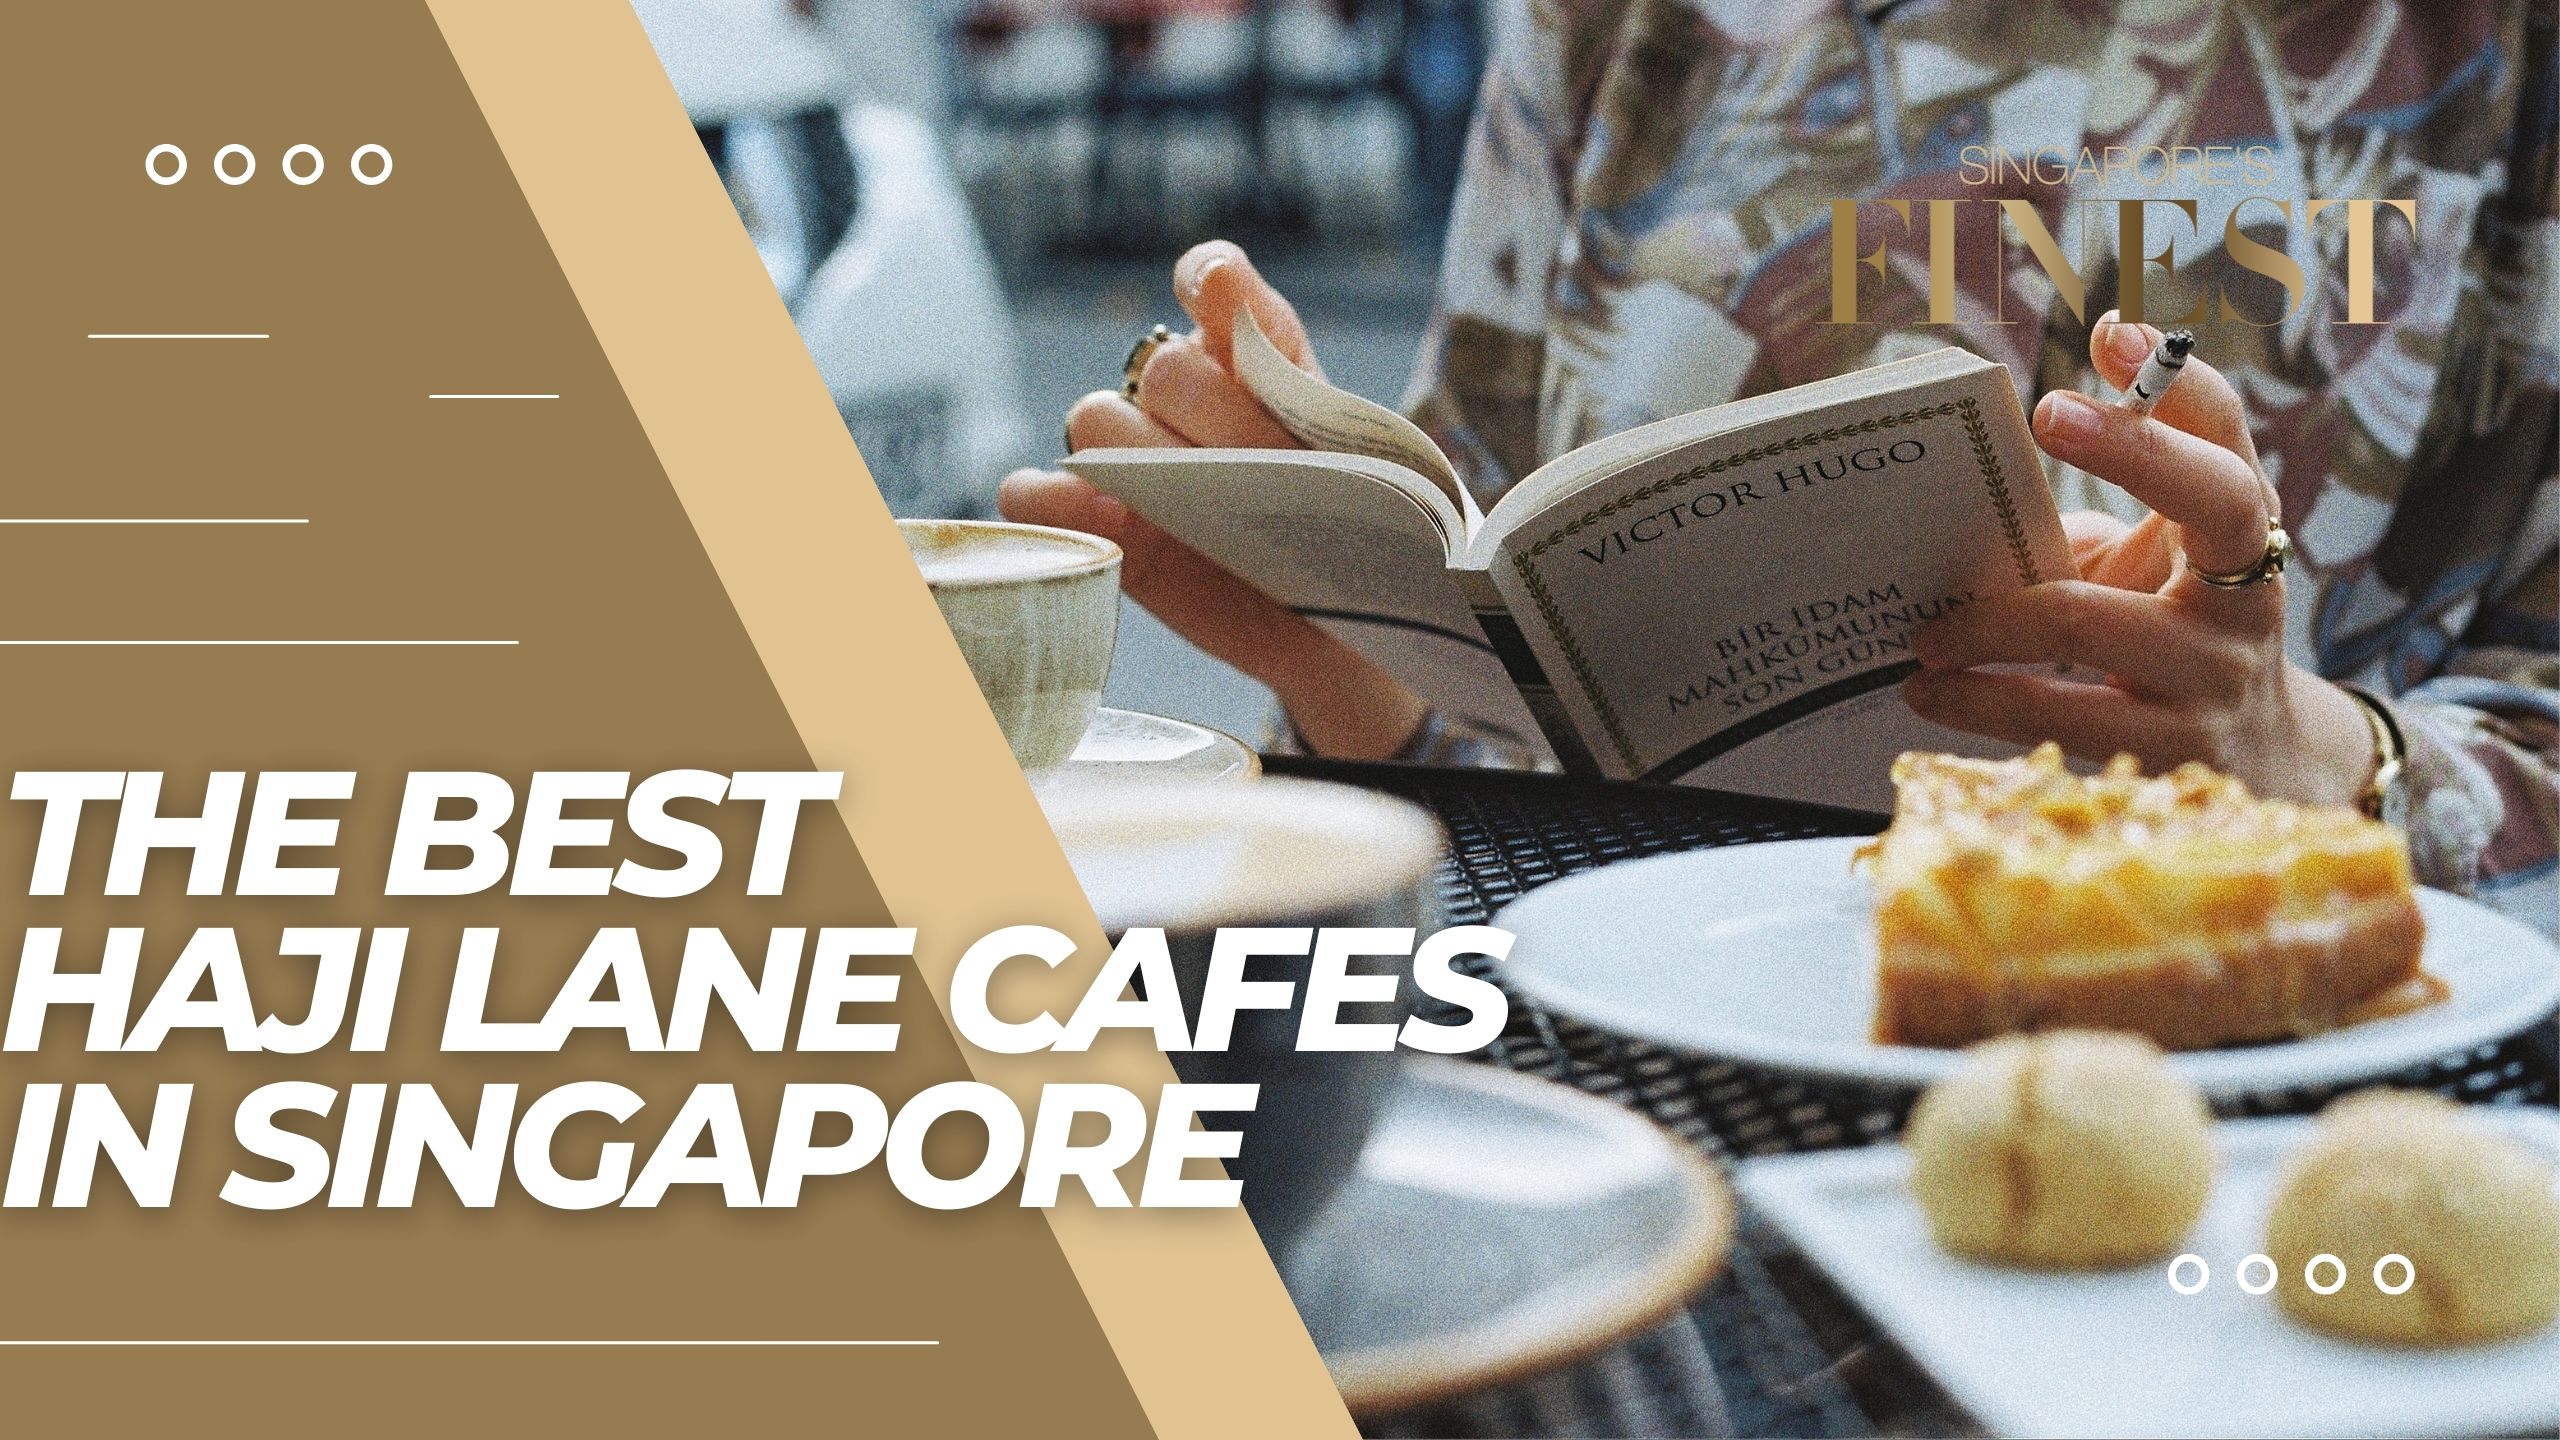 The Finest Haji Lane Cafes in Singapore